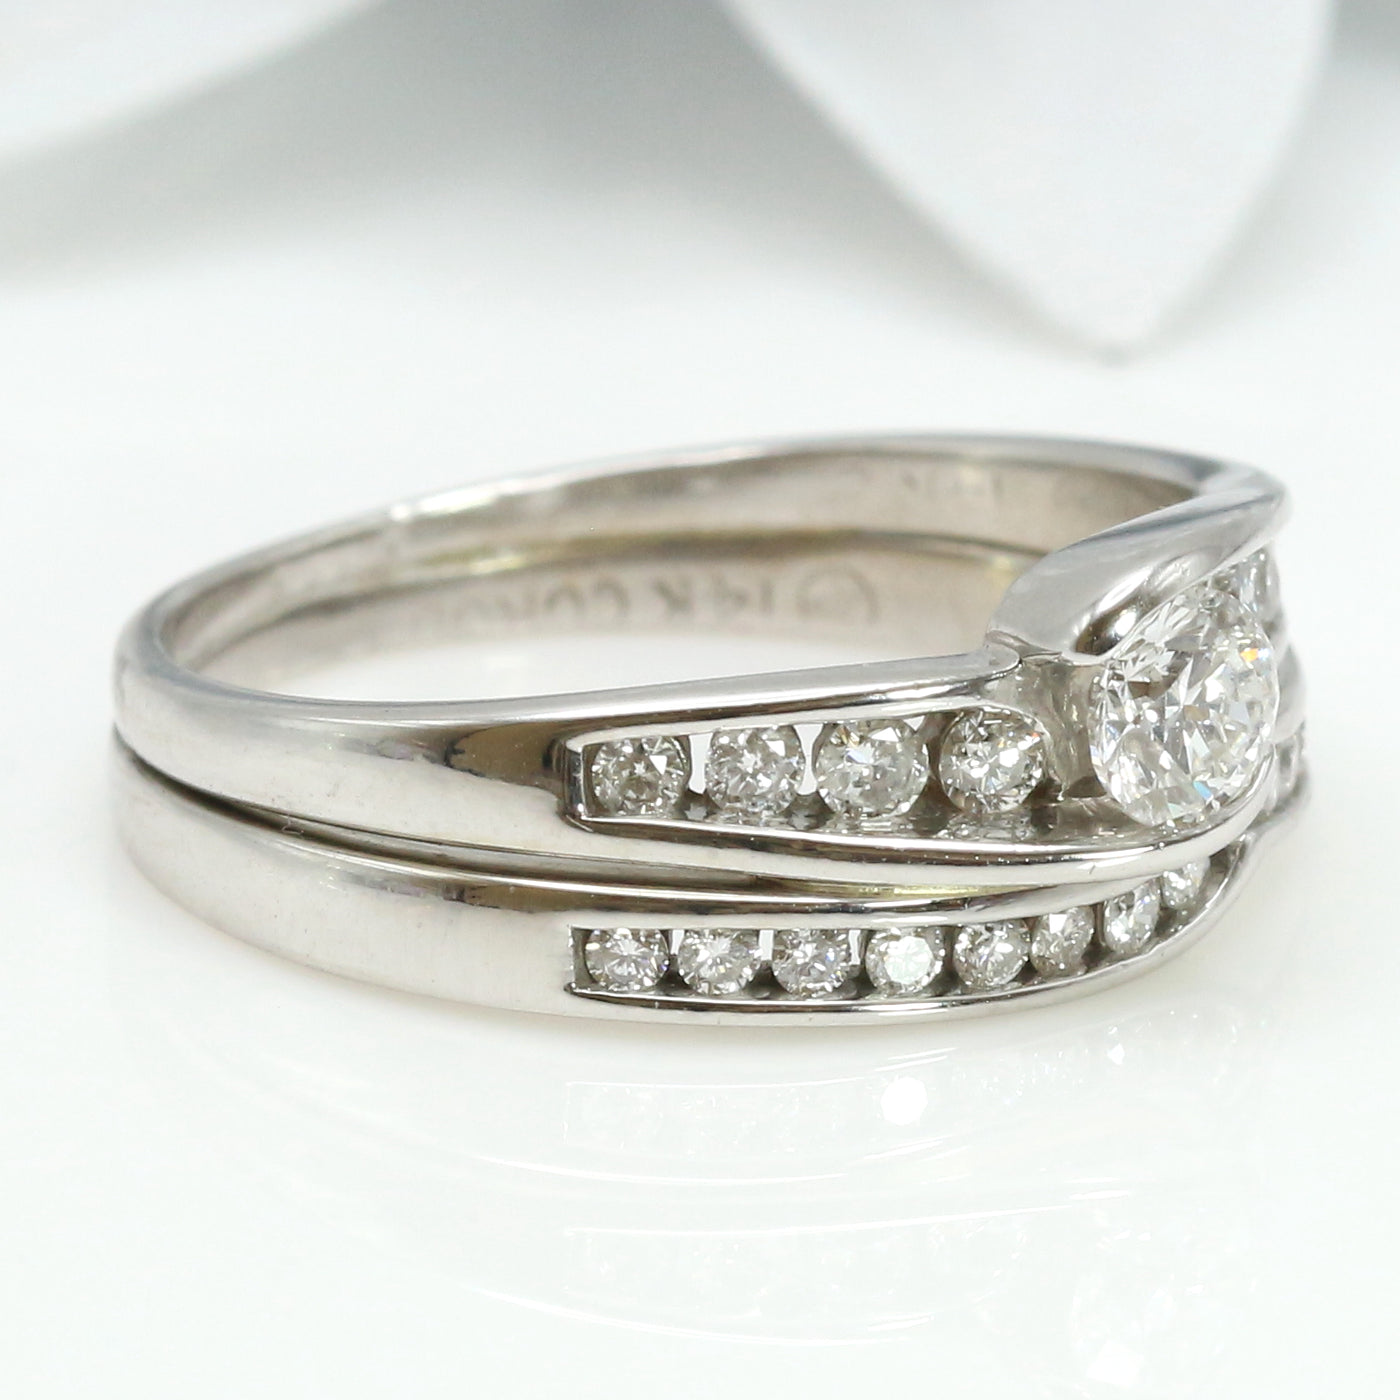 Soldered Set Wedding & Engagement Ring